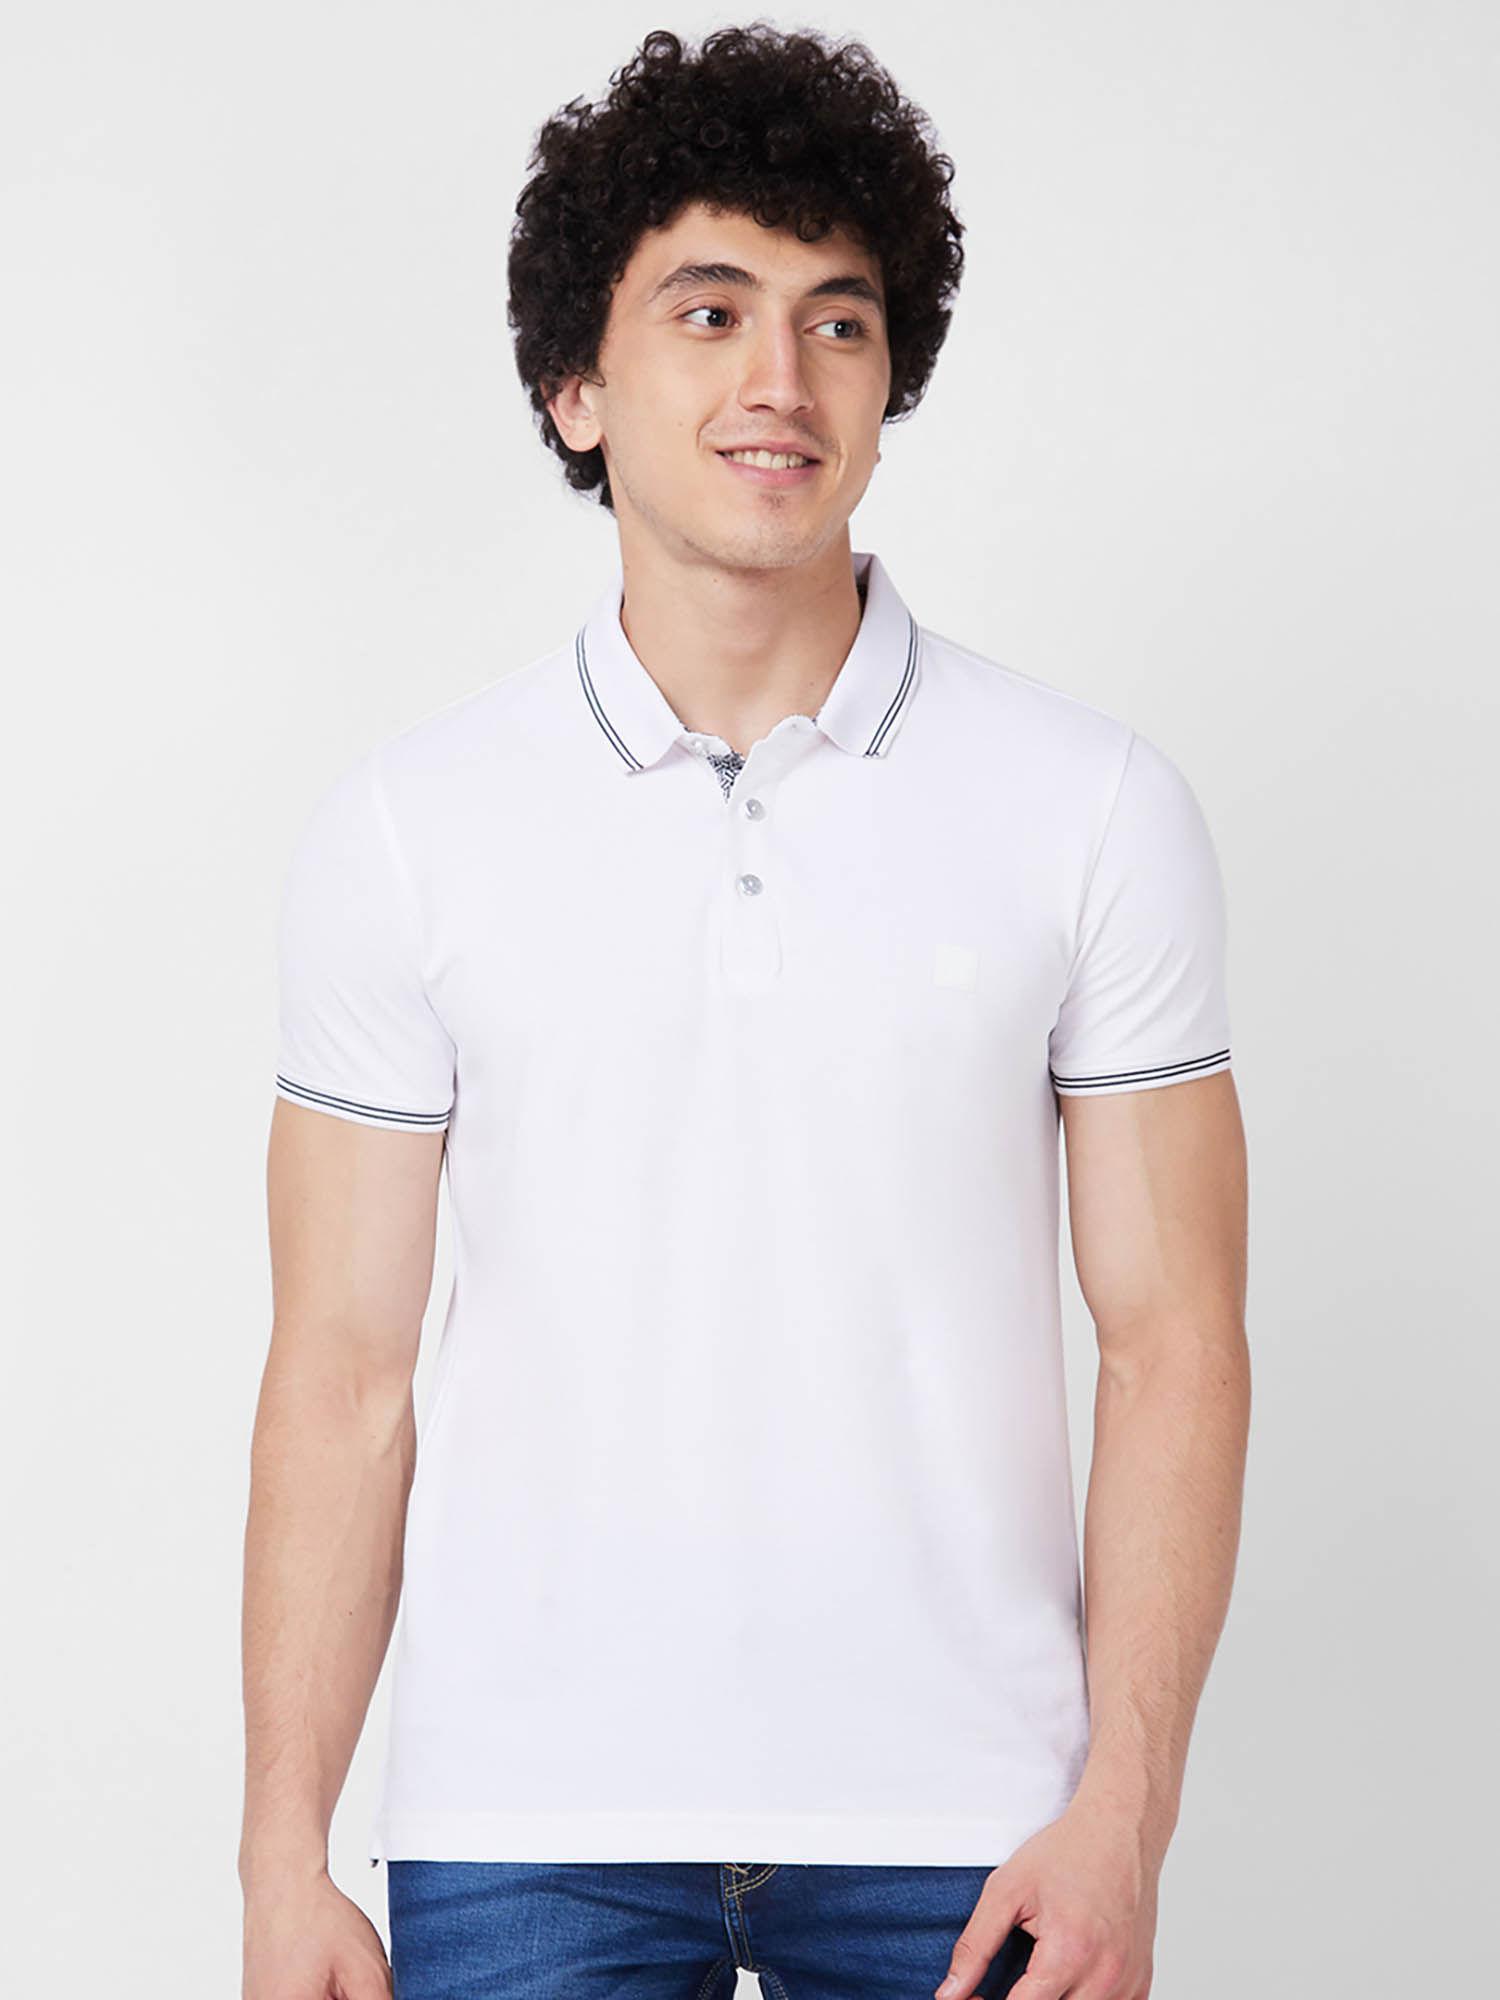 slim fit white polo t-shirt for men